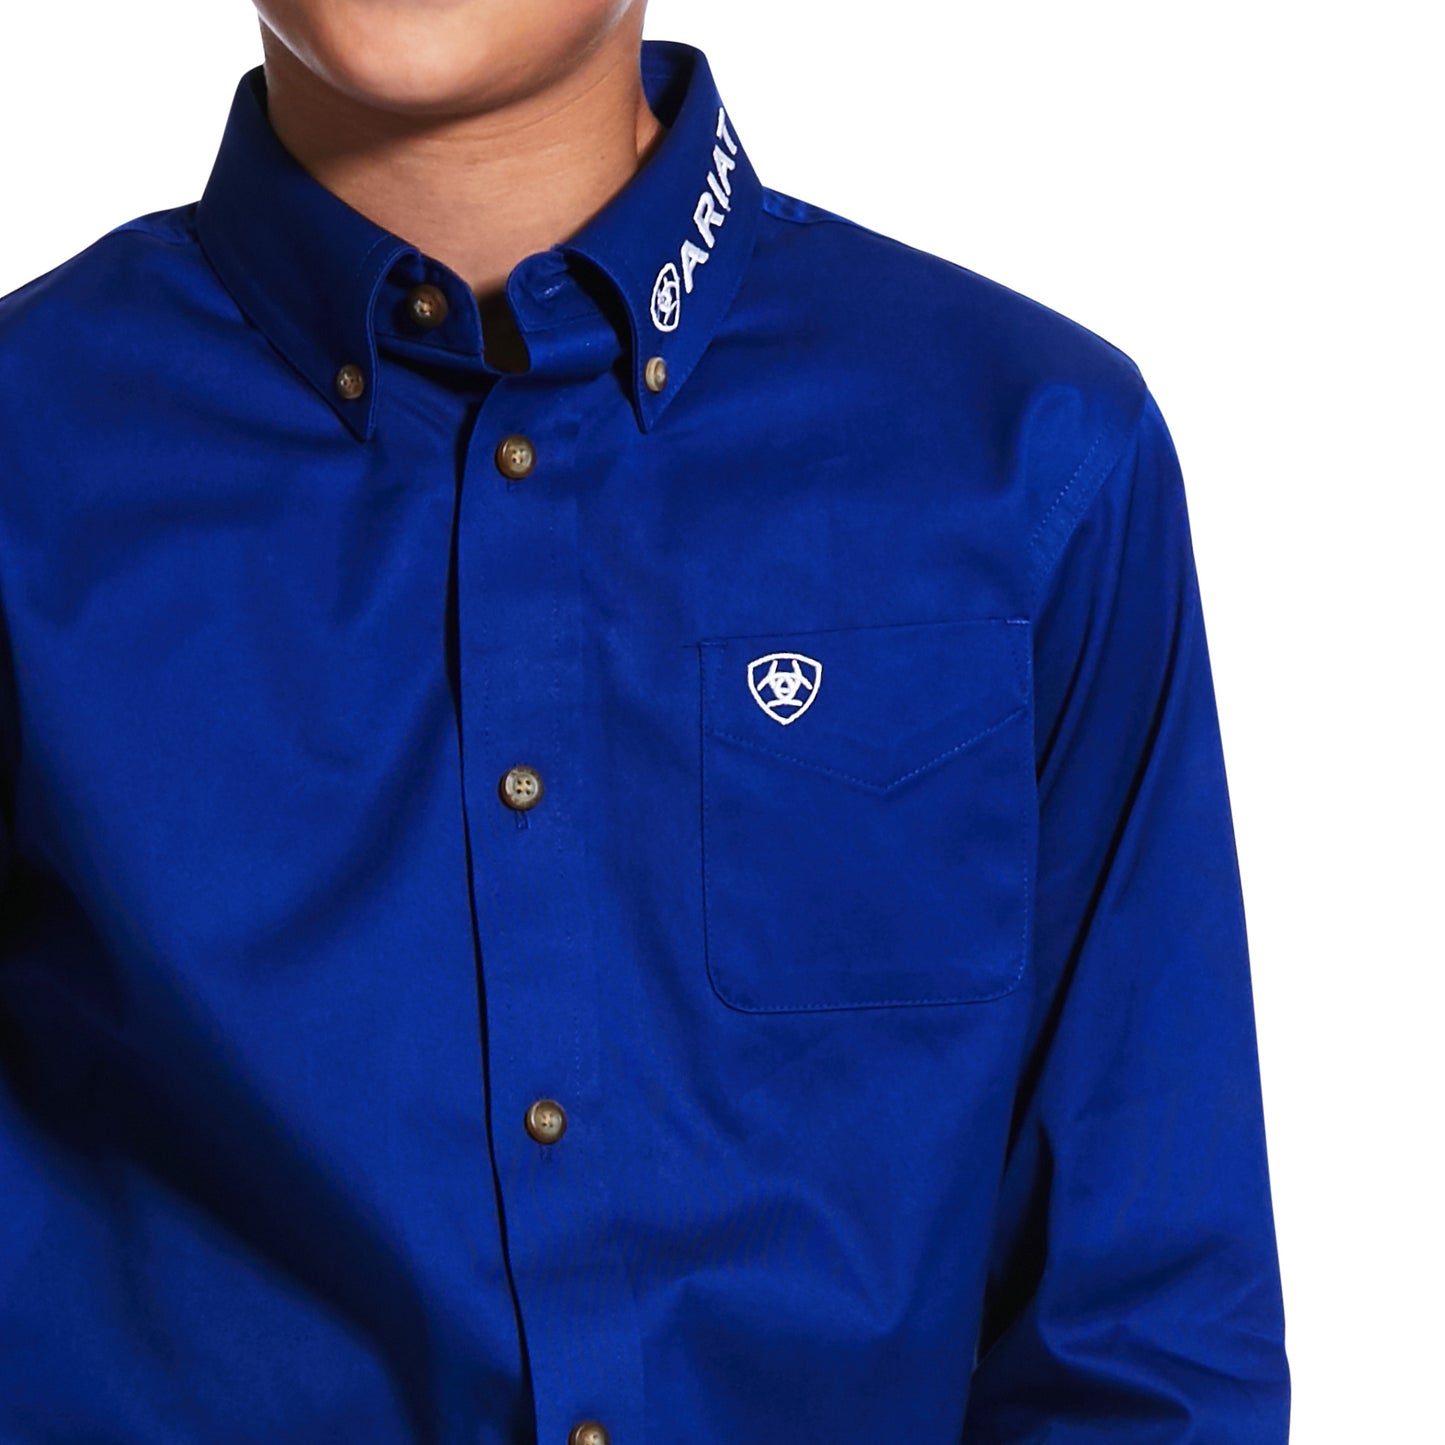 Ariat Boy's Team Logo Twill Classic Fit Shirt - Blue